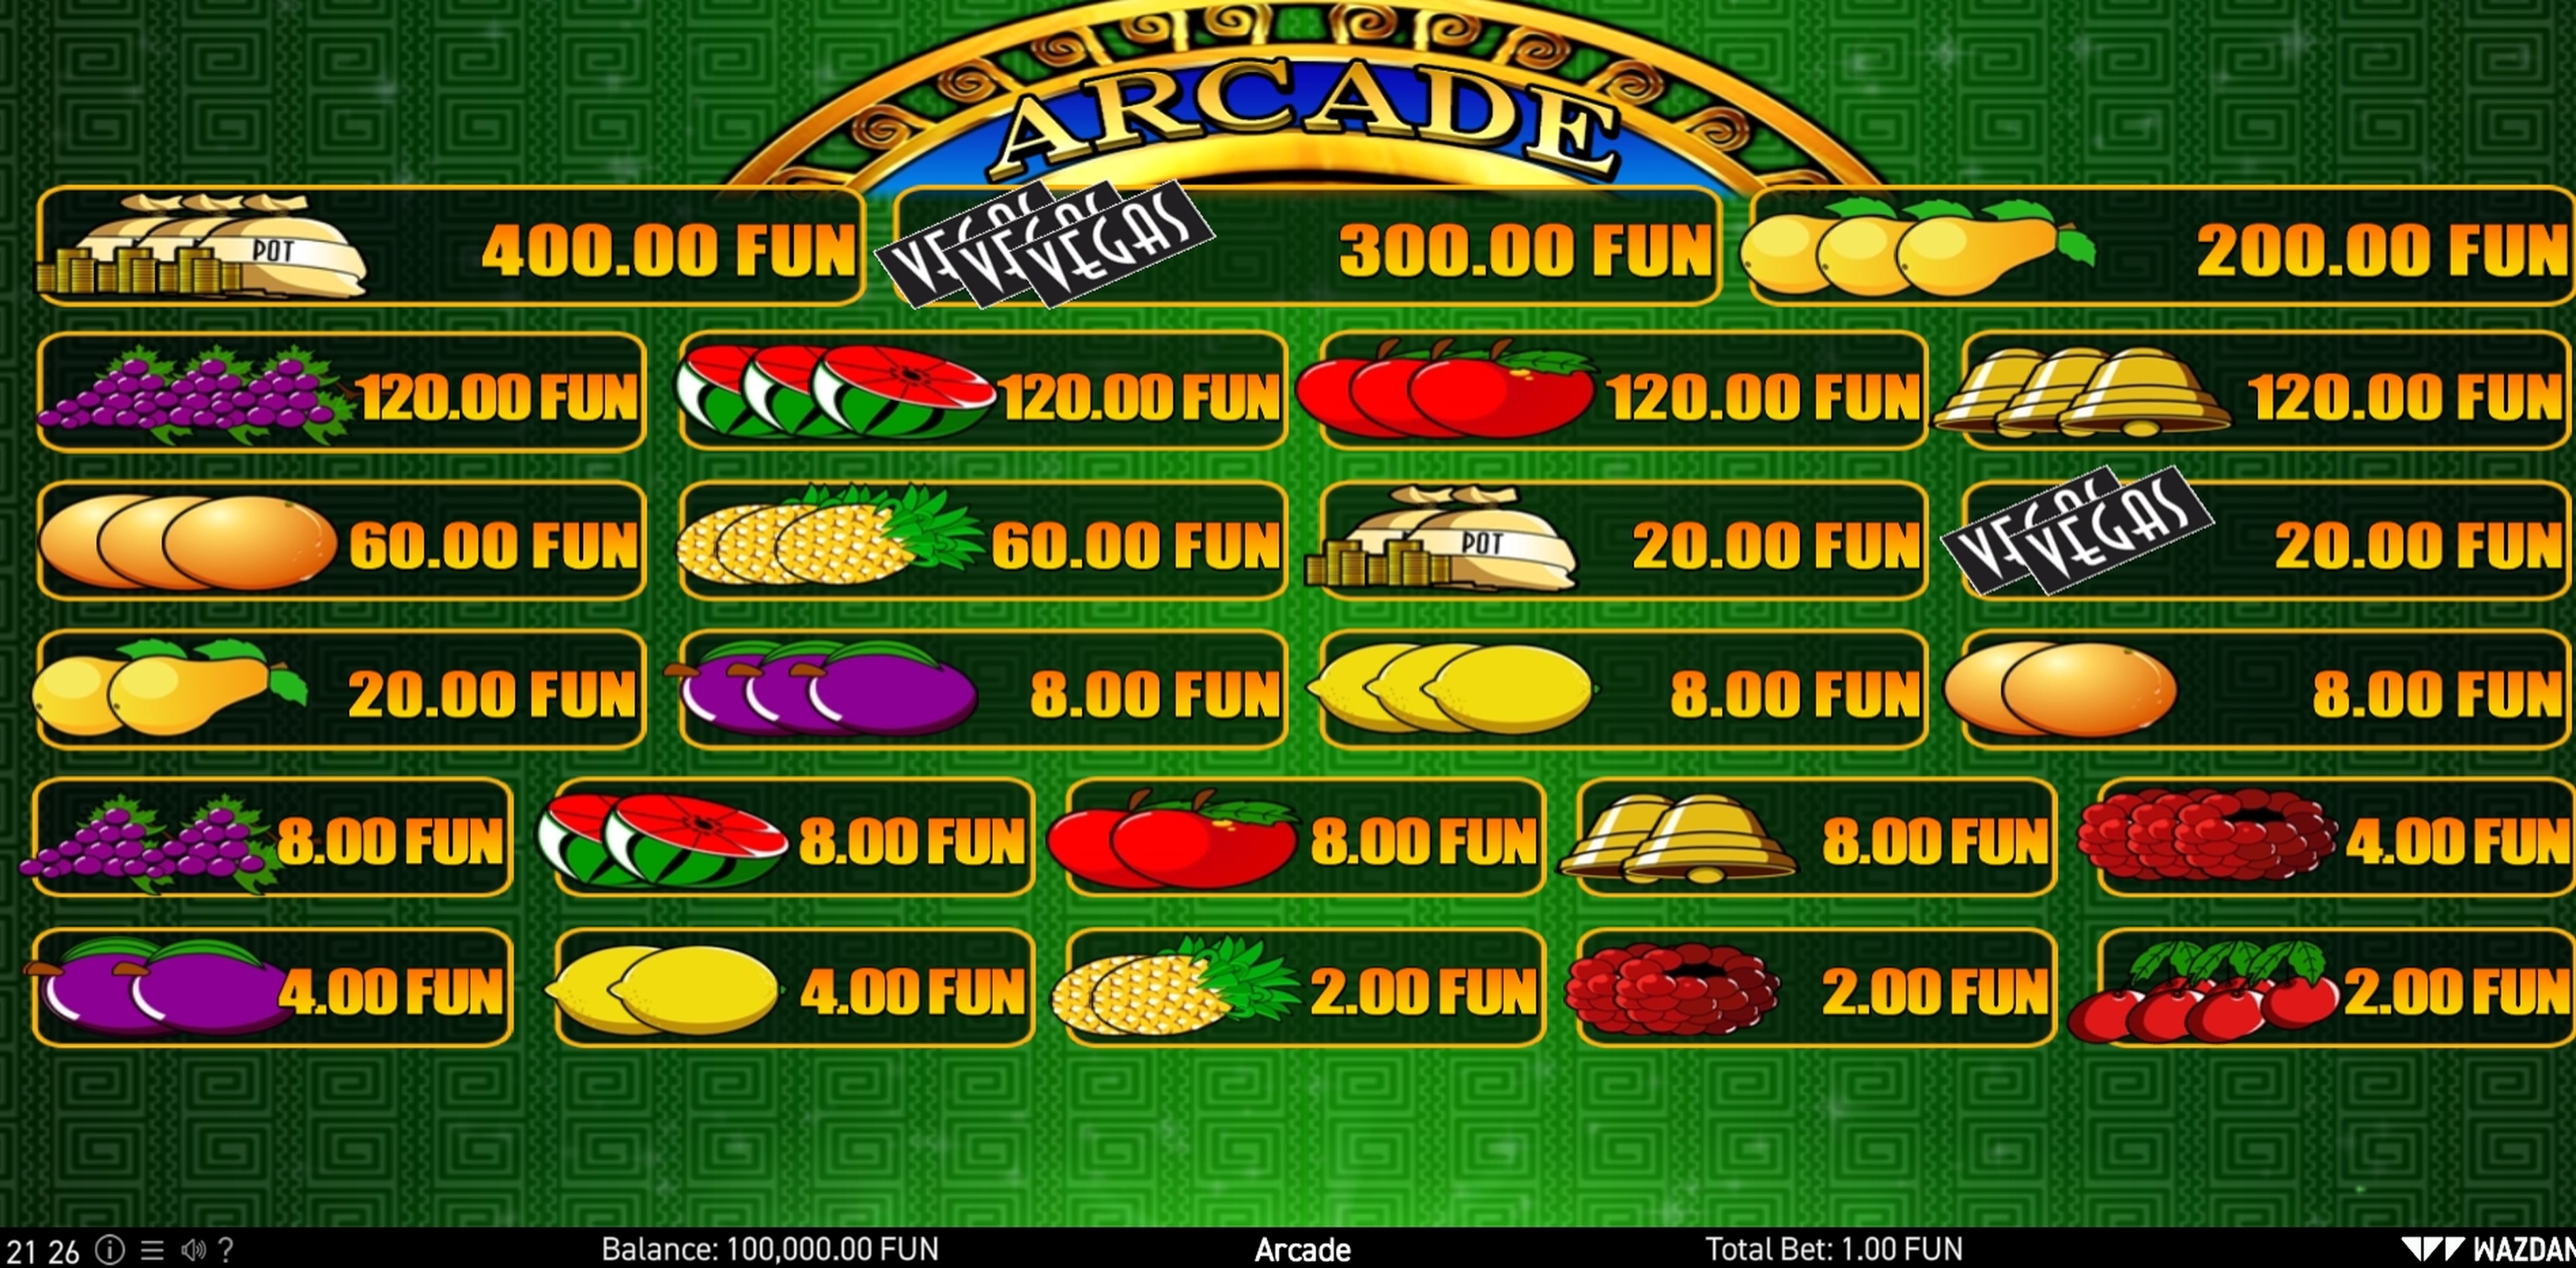 Info of Arcade Slot Game by Wazdan